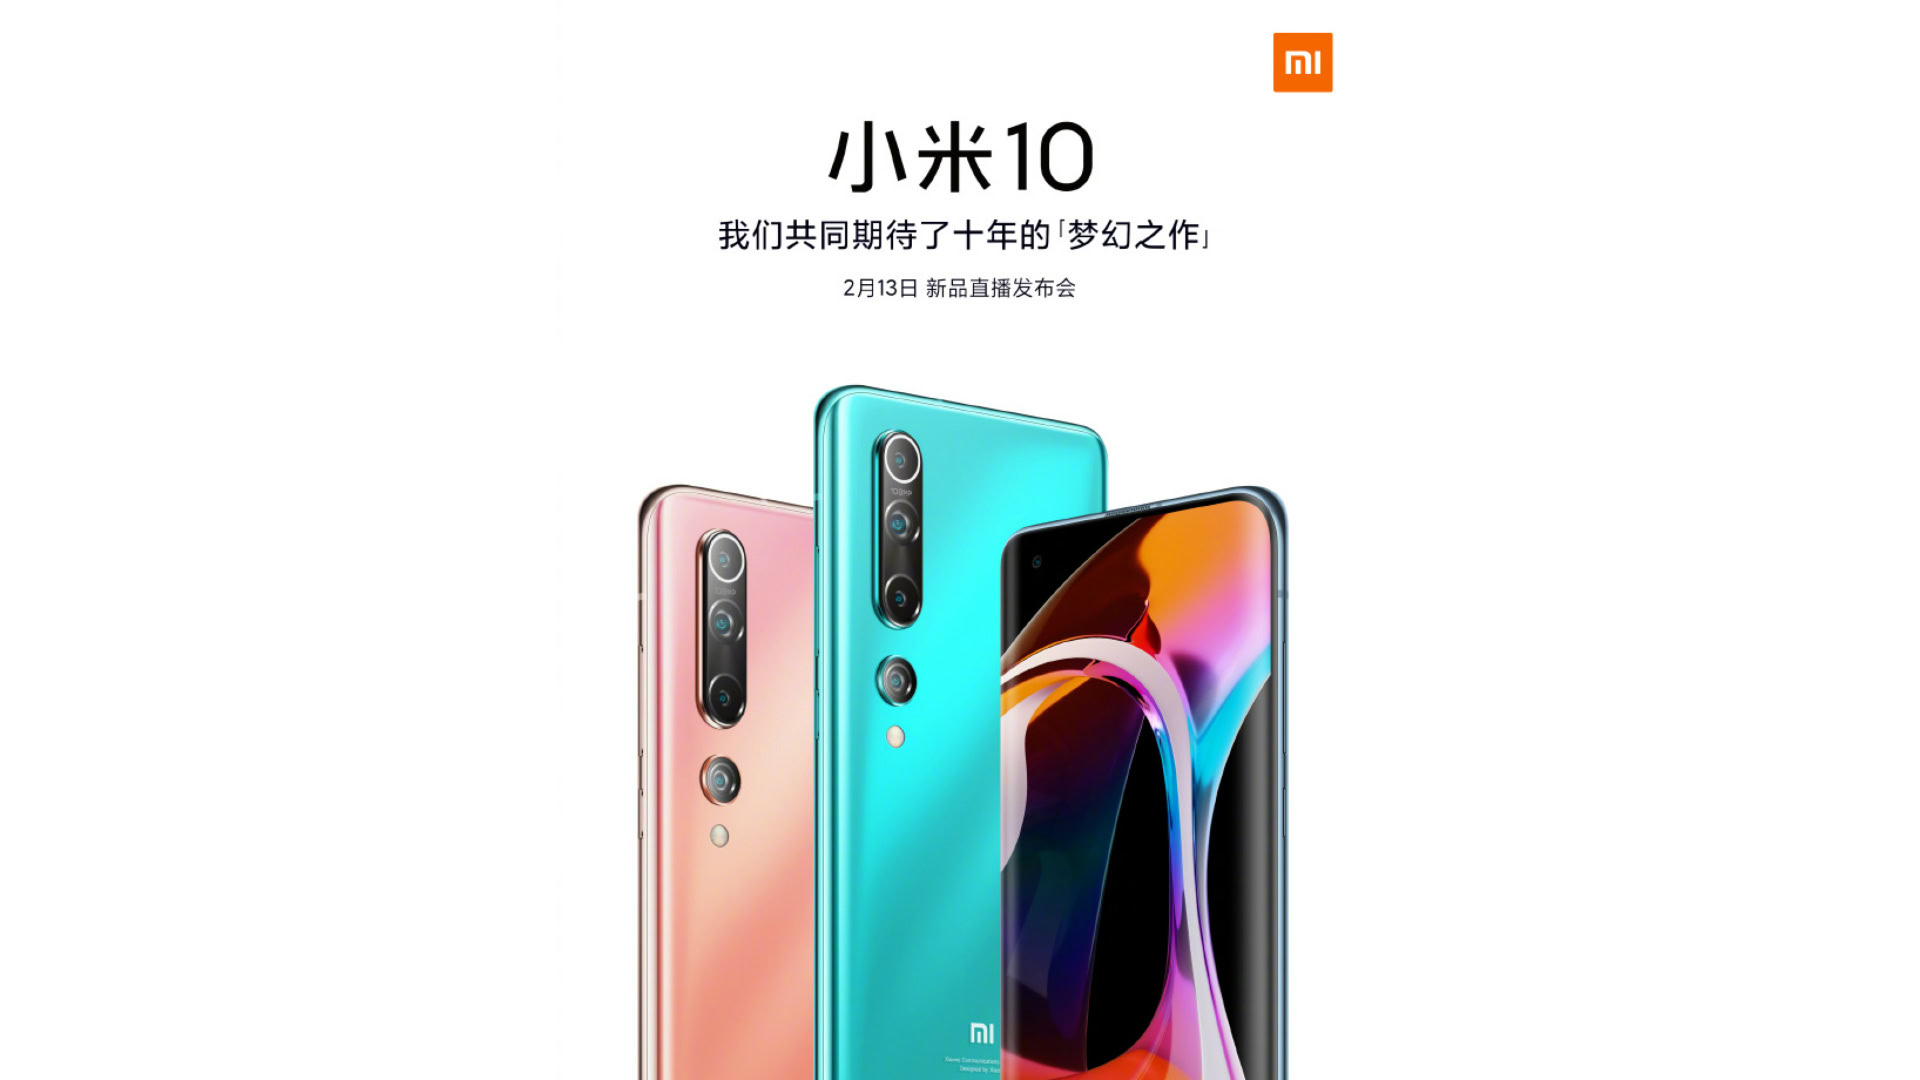 Xiaomi Mi 10t Pro Dxomark